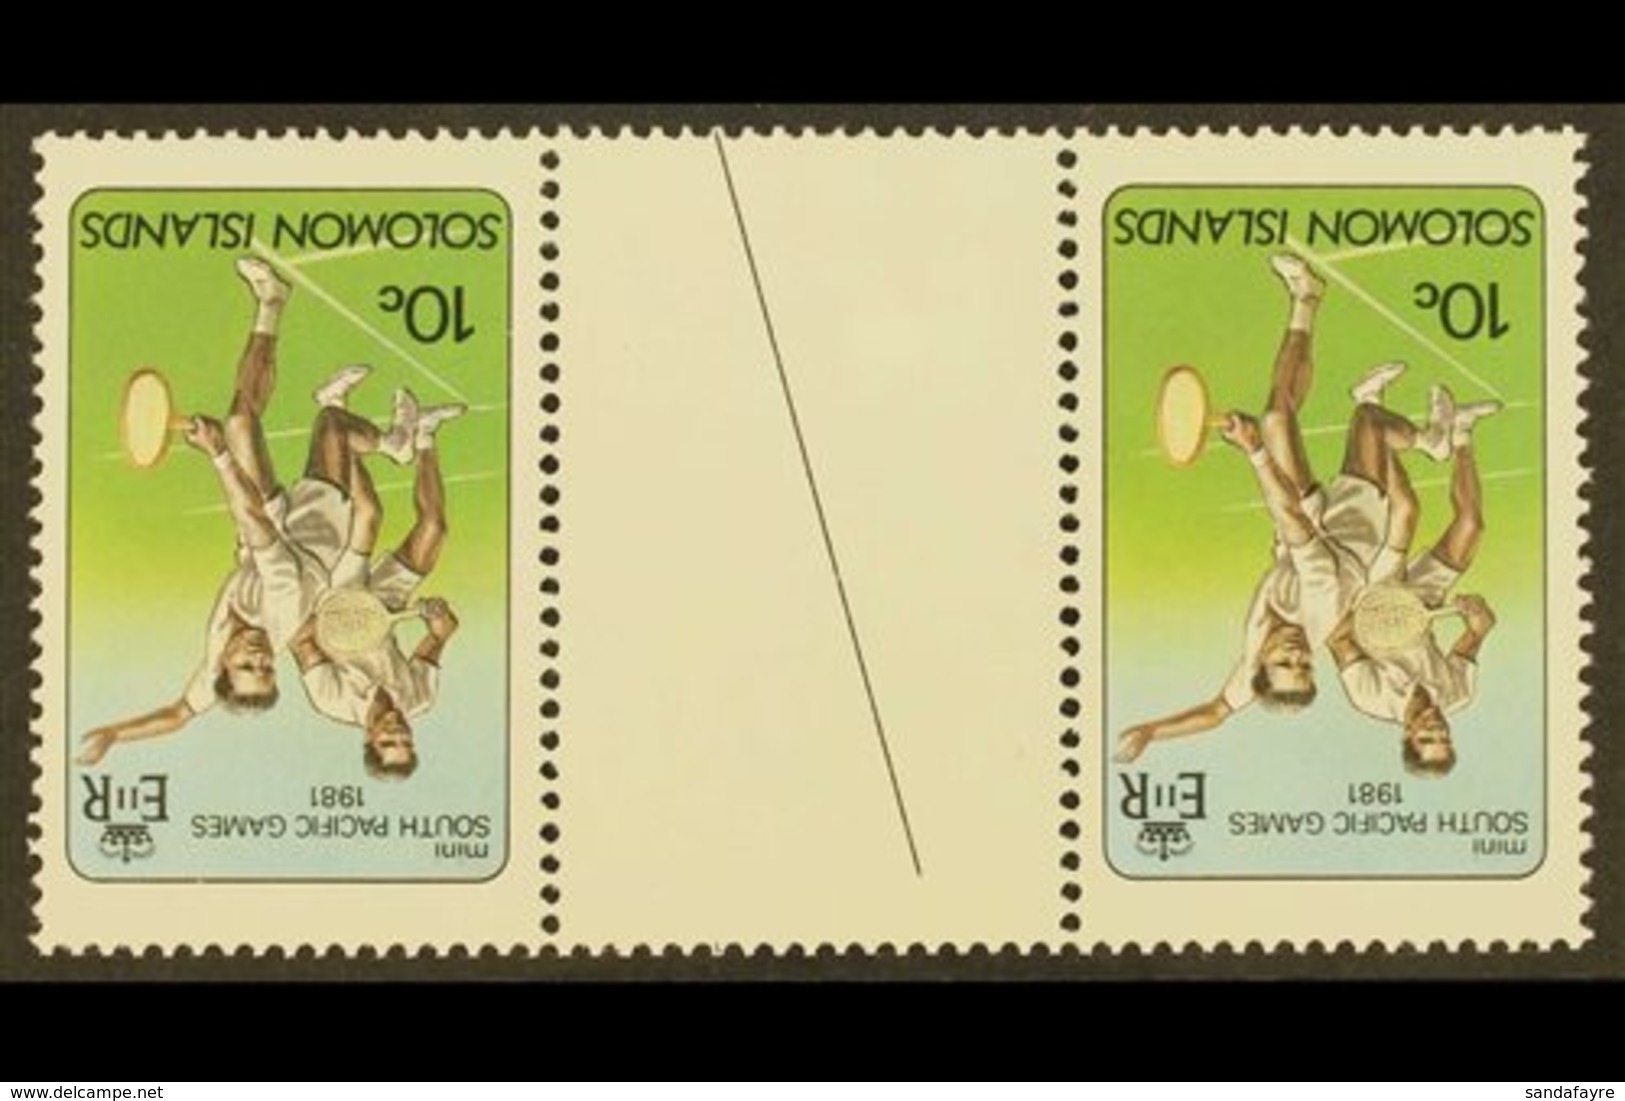 1981 10c Pacific Games - Tennis WATERMARK INVERTED Variety, SG 440w, Never Hinged Mint Horiz GUTTER PAIR, Fresh & Scarce - Isole Salomone (...-1978)